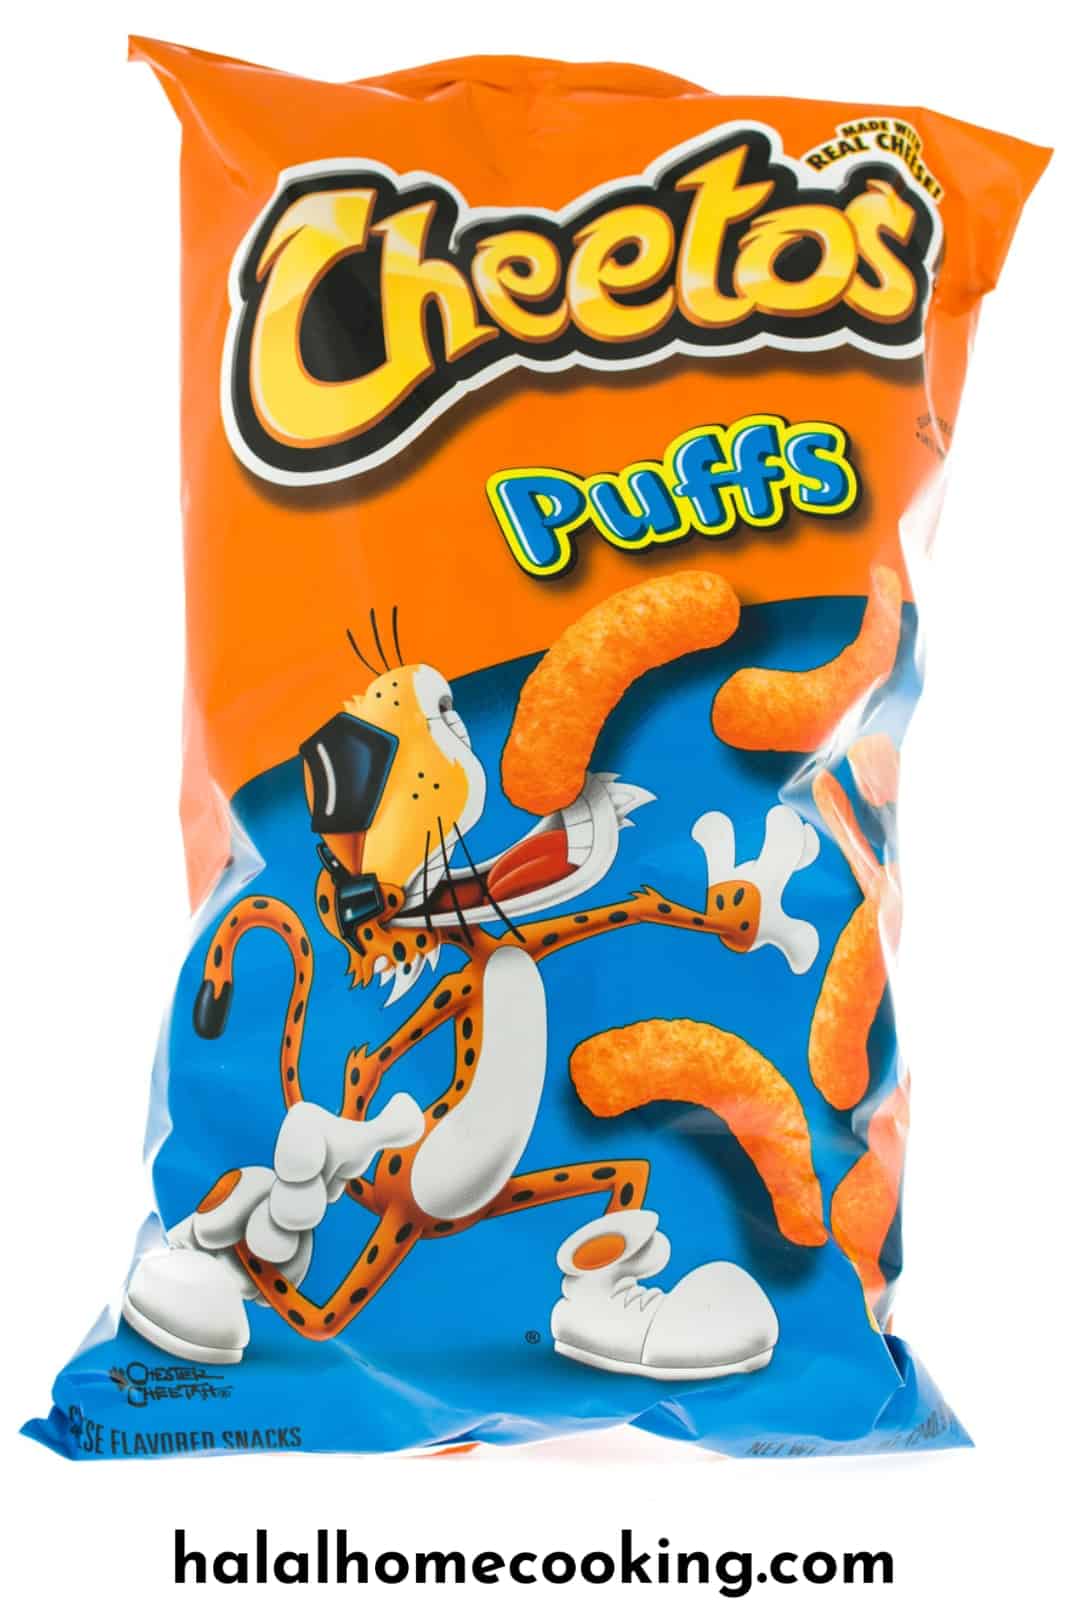 is-cheetos-halal-or-haram